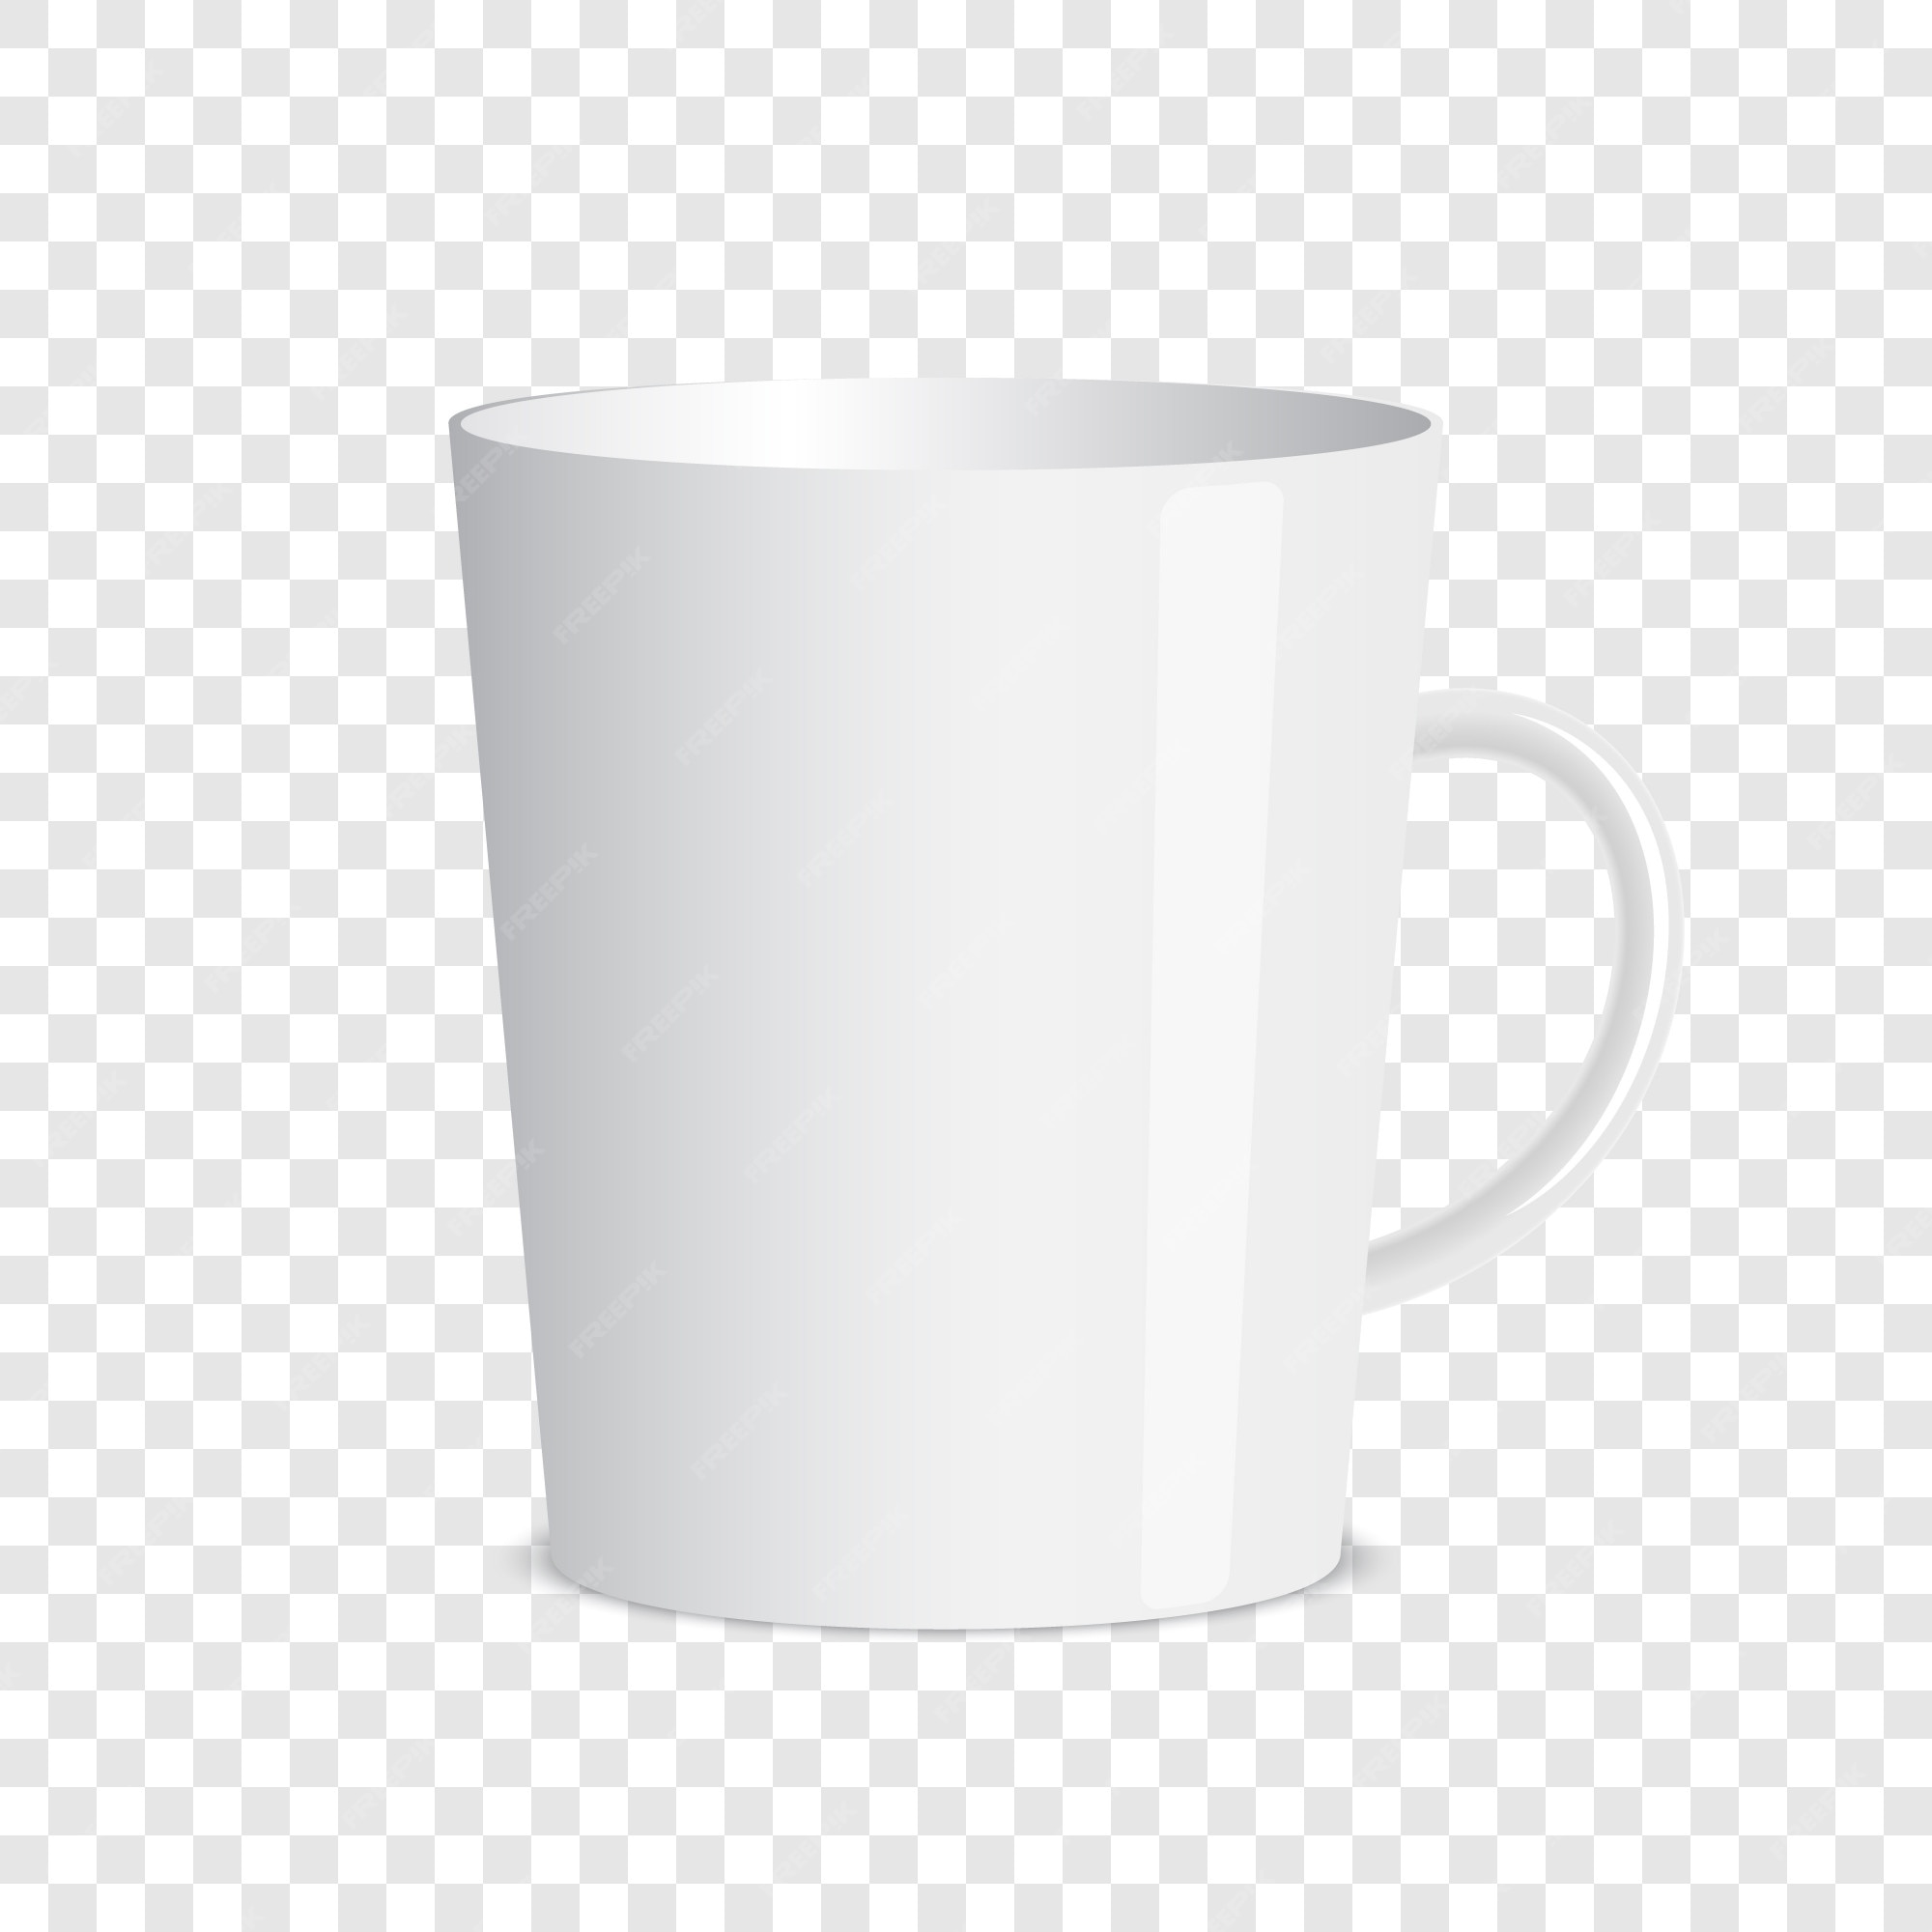 Premium Vector  White mug on transparent background. illustration.